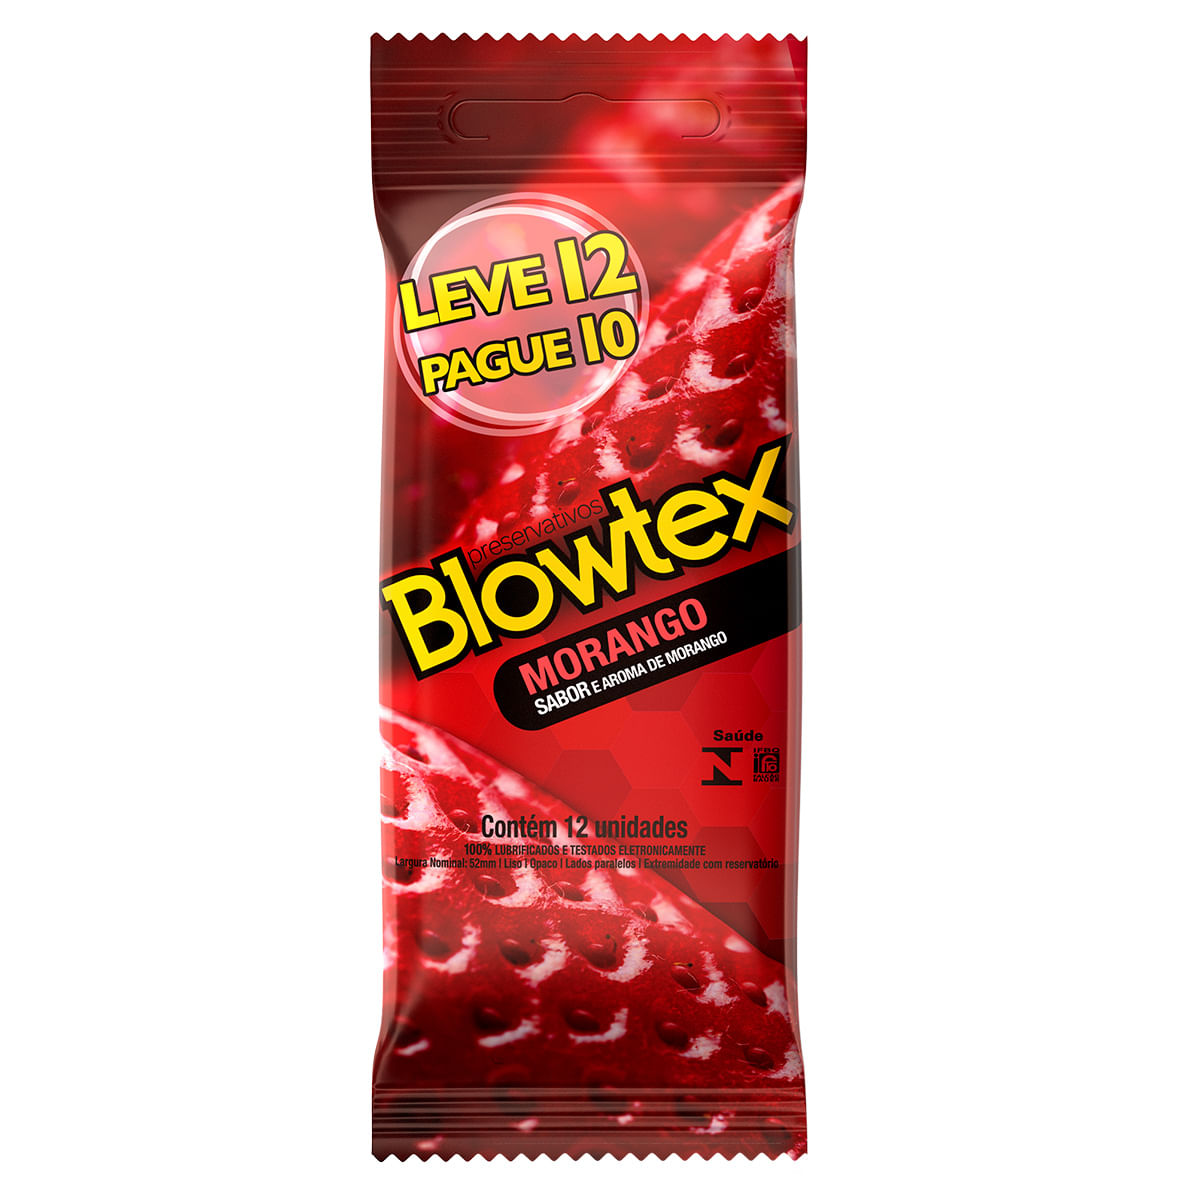 Preservativos Sabor e Aroma Morango Leve 12 Pague 10 unidades Blowtex